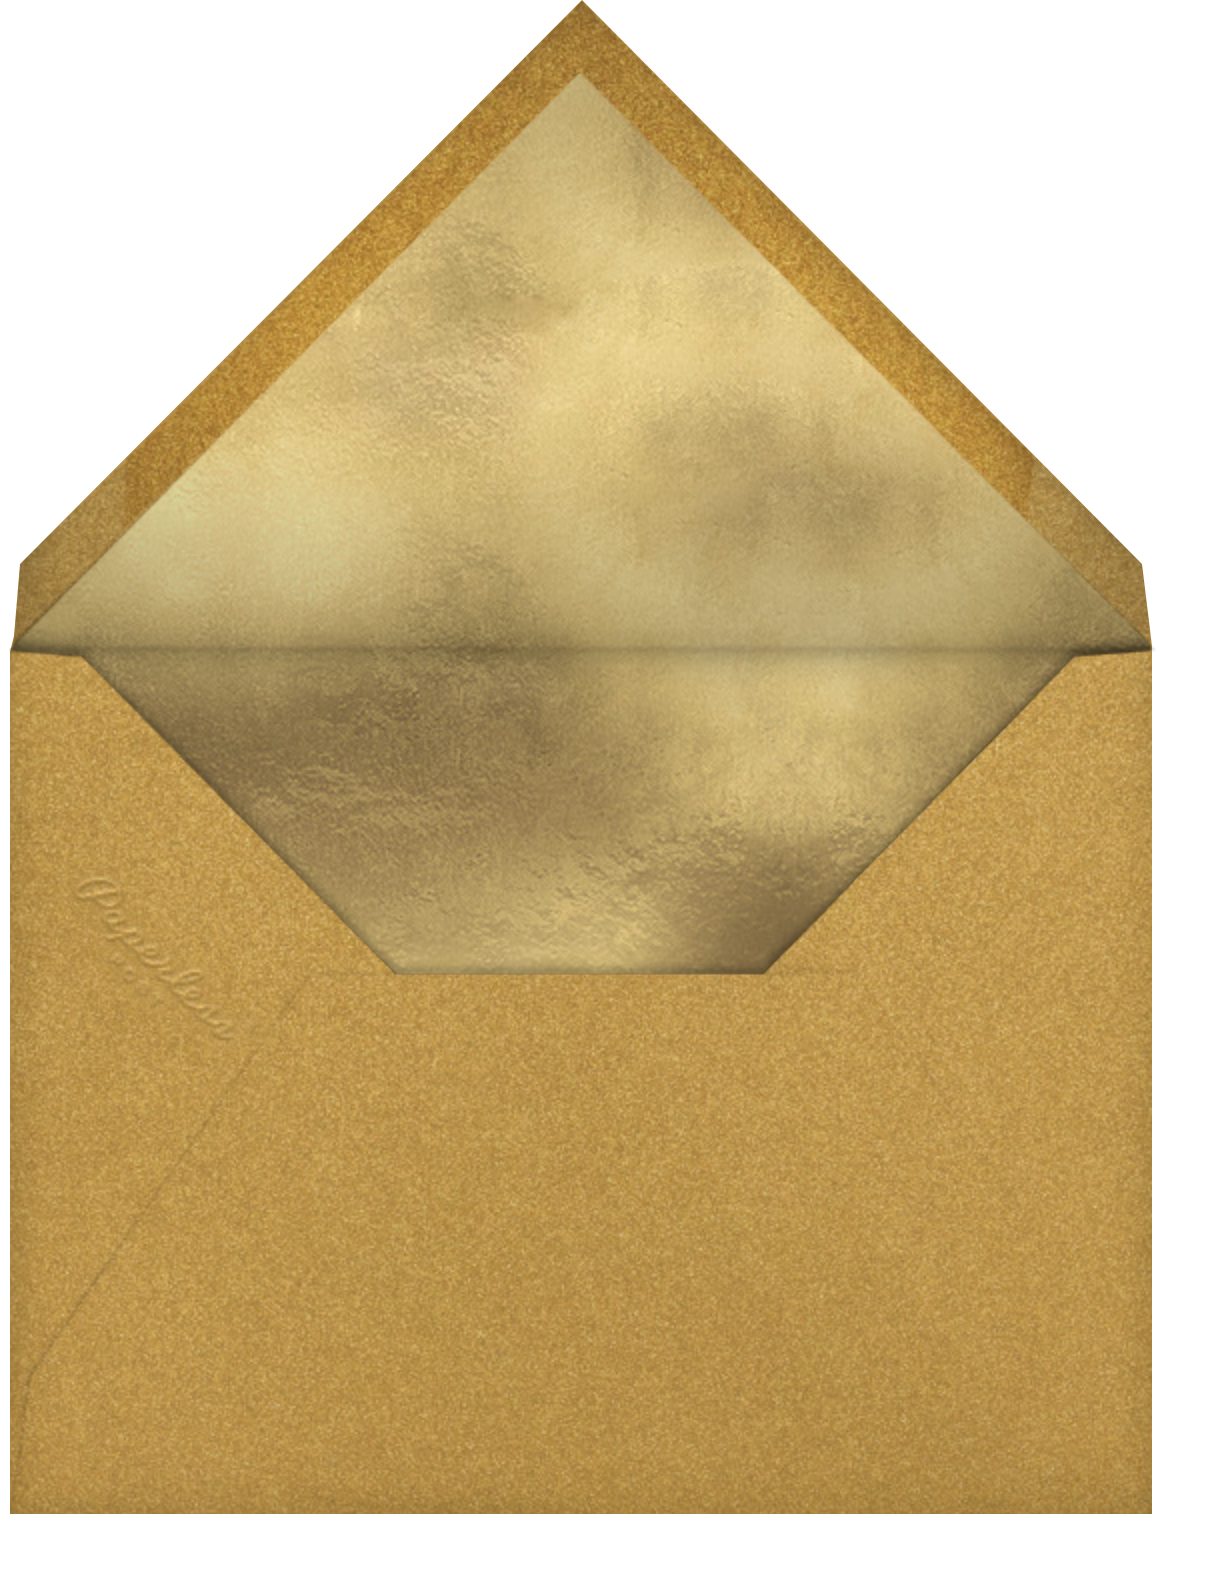 Vinayanka (Invitation) - Bright Pink - Paperless Post - Envelope